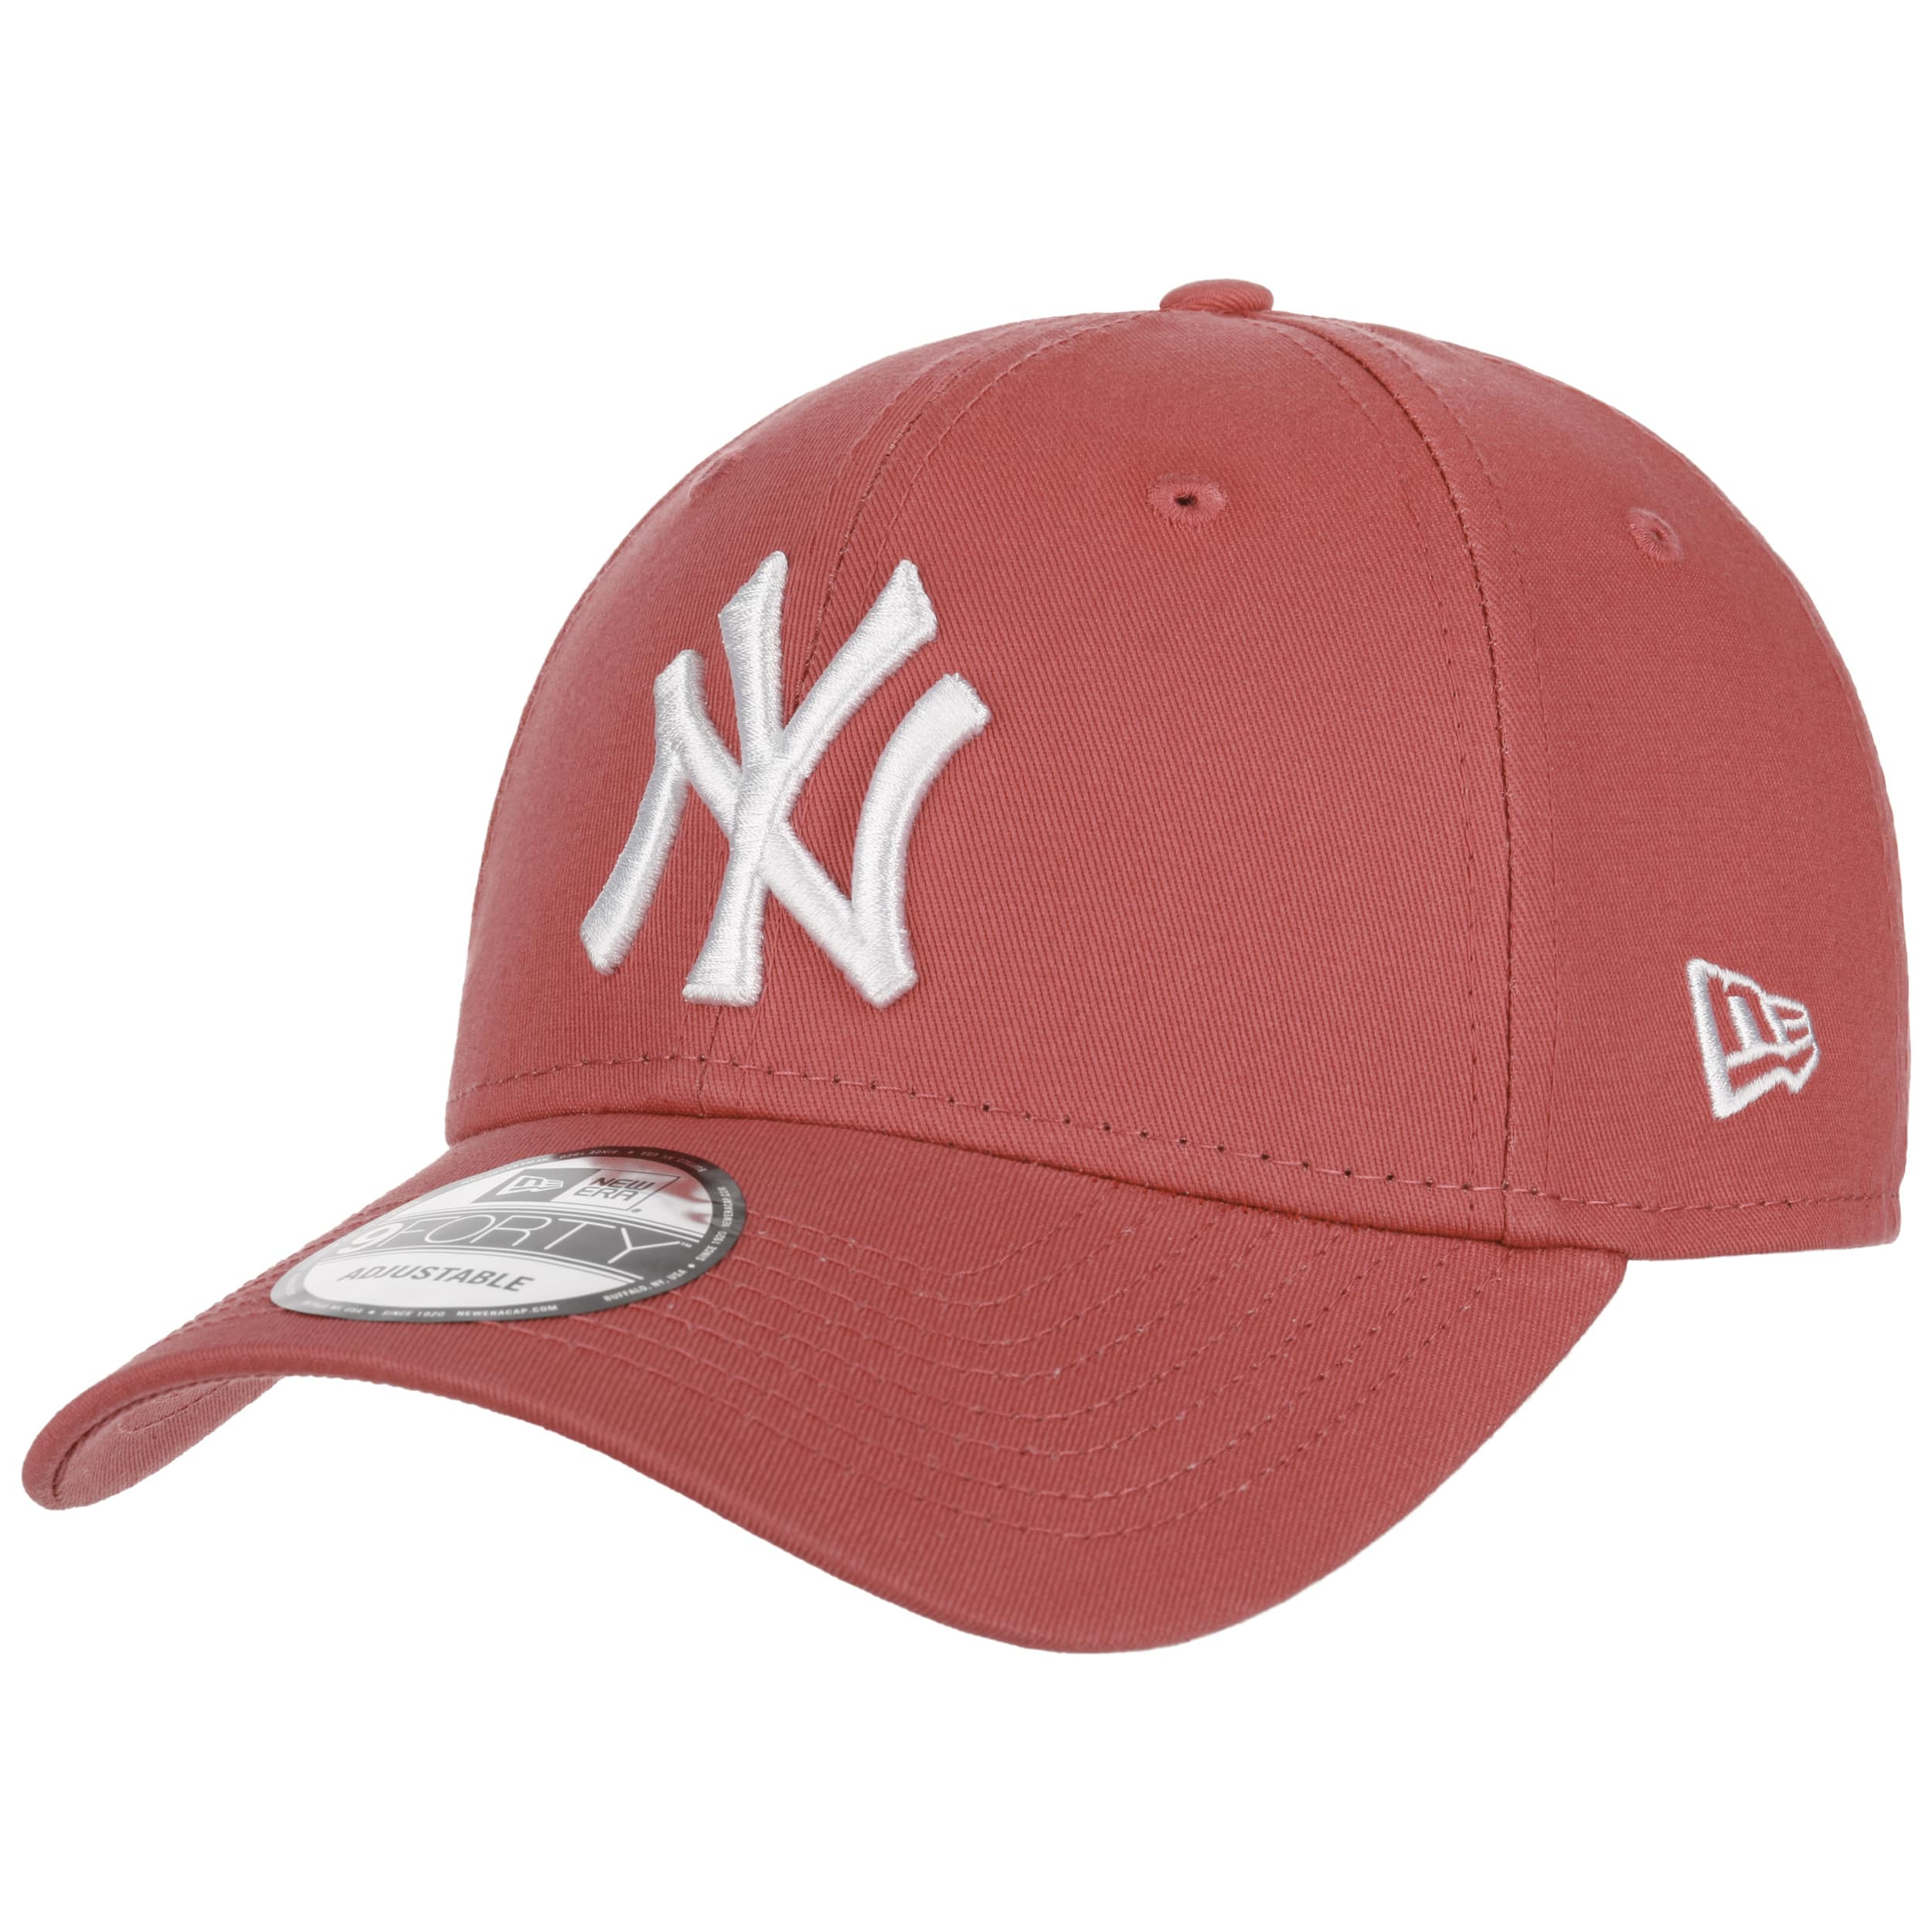 Green New Era MLB New York Yankees 9FORTY Cap